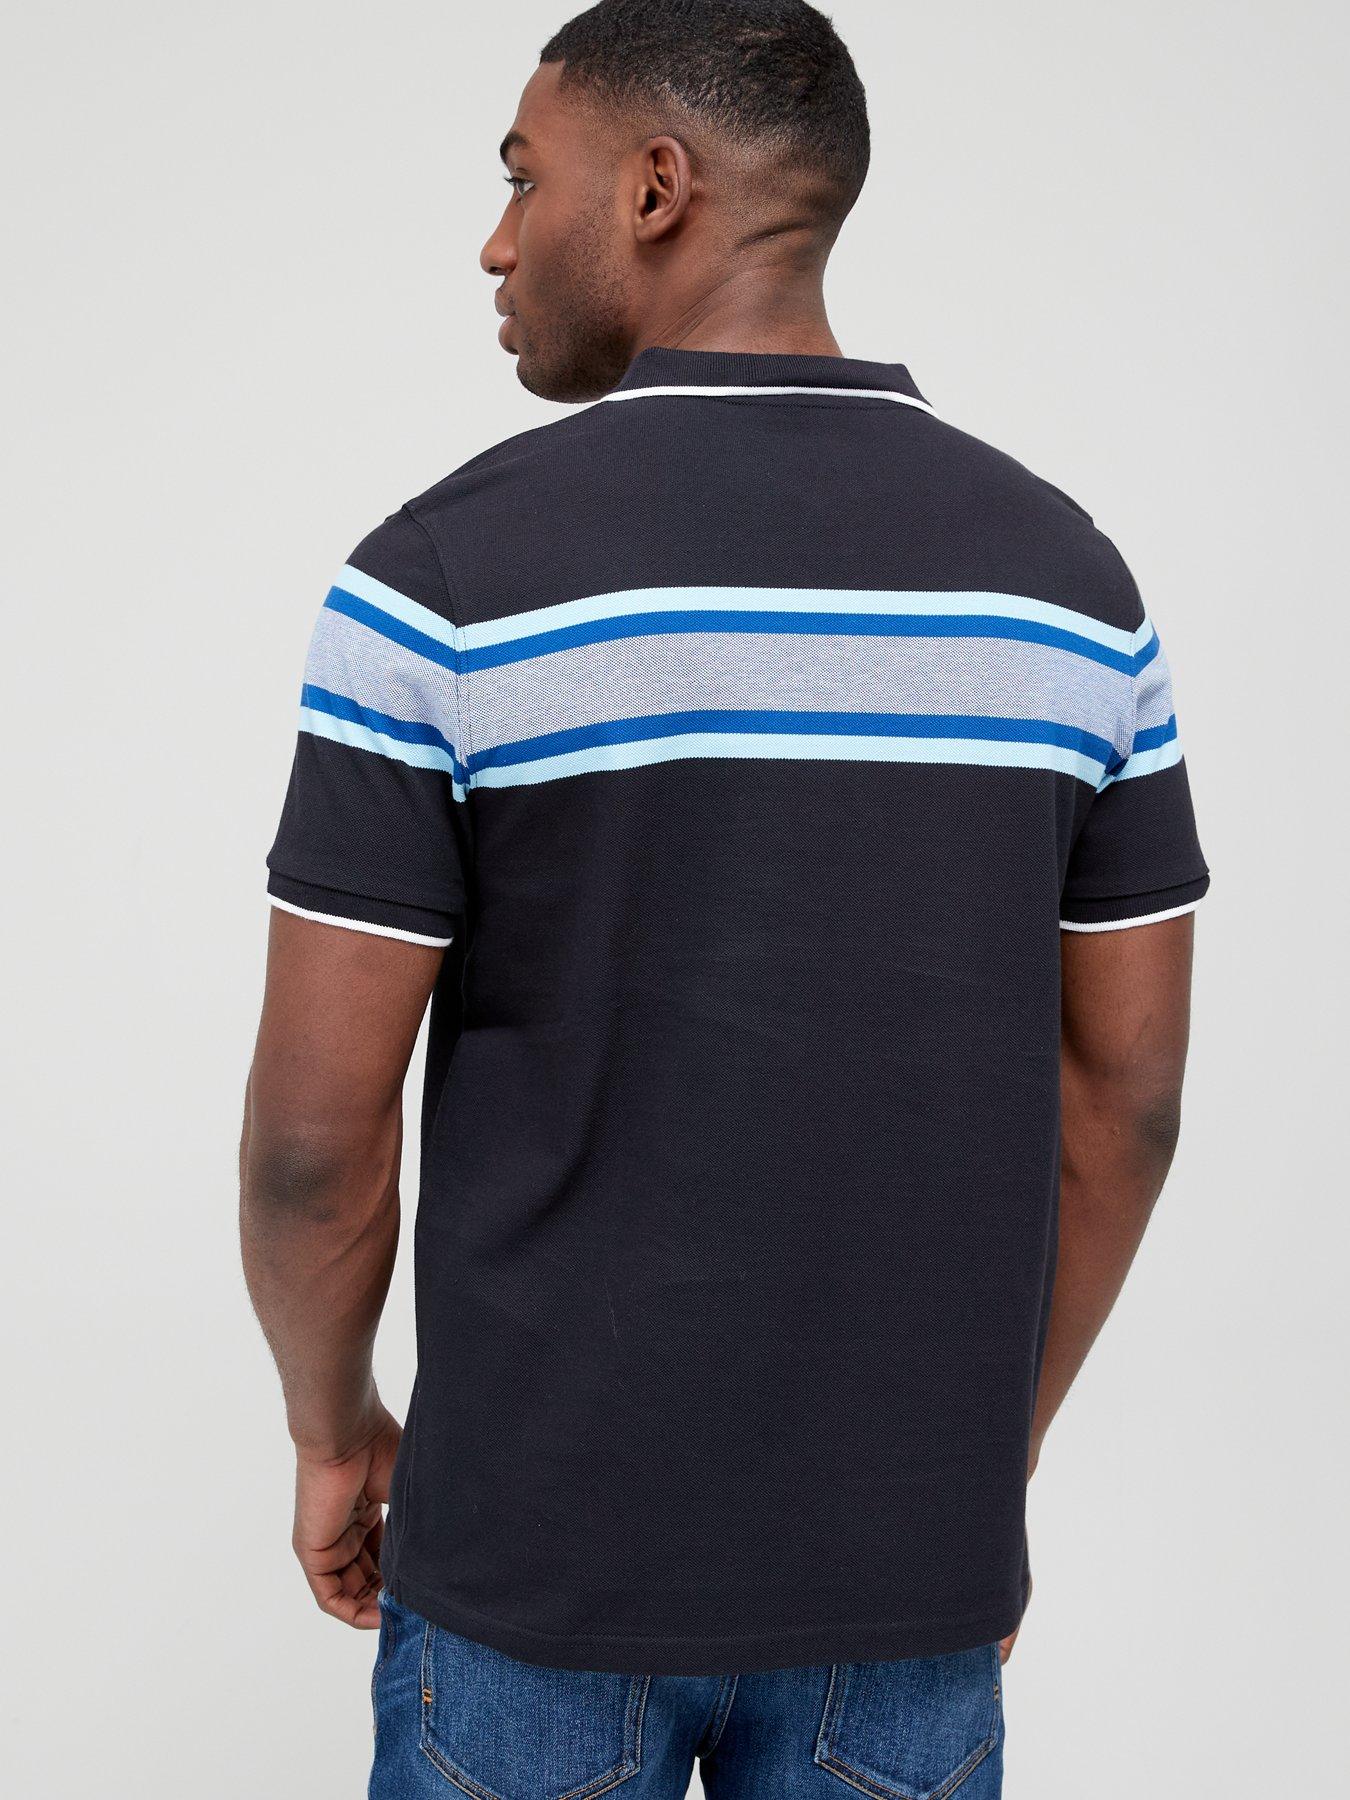 Very Man Chest Stripe Polo Shirt - Navy/Blue | very.co.uk